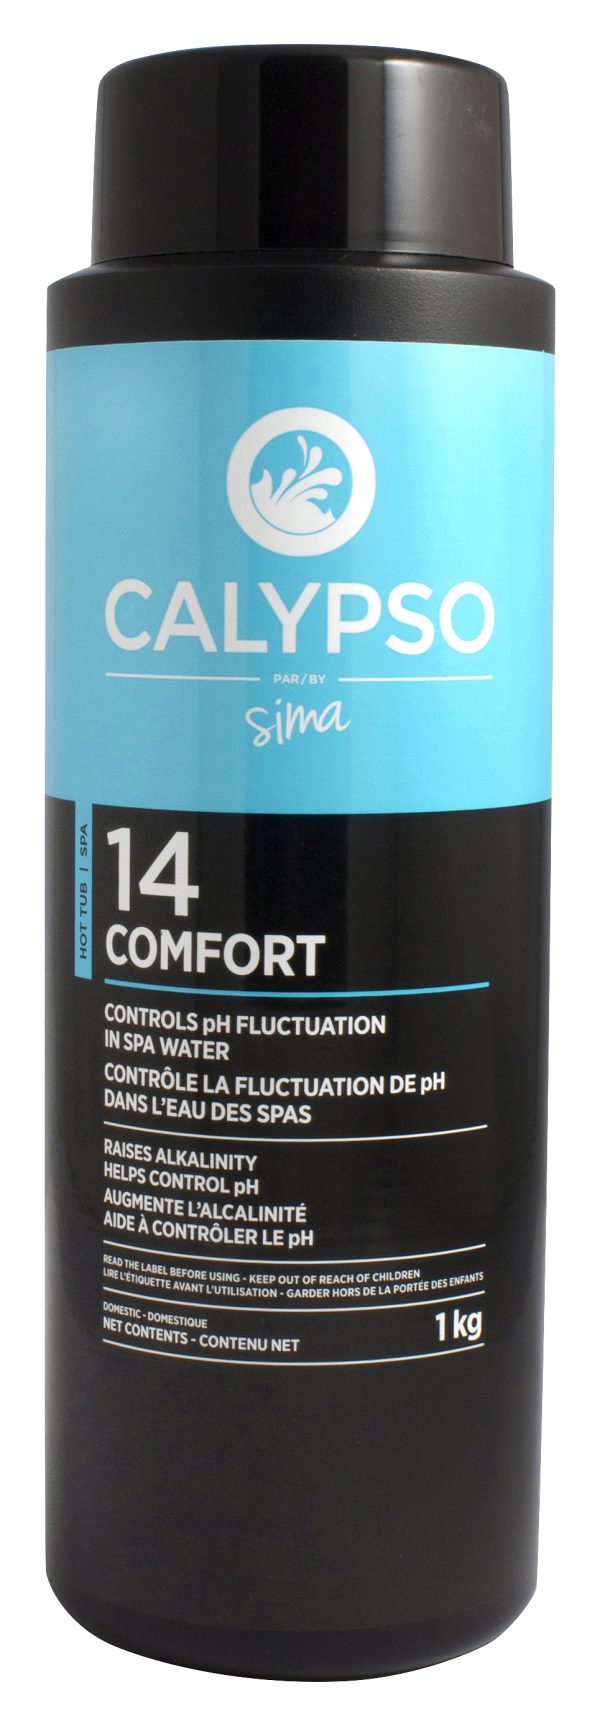 Calypso Comfort #14 - Spa products - Spa maintenance - Sima POOLS & SPAS